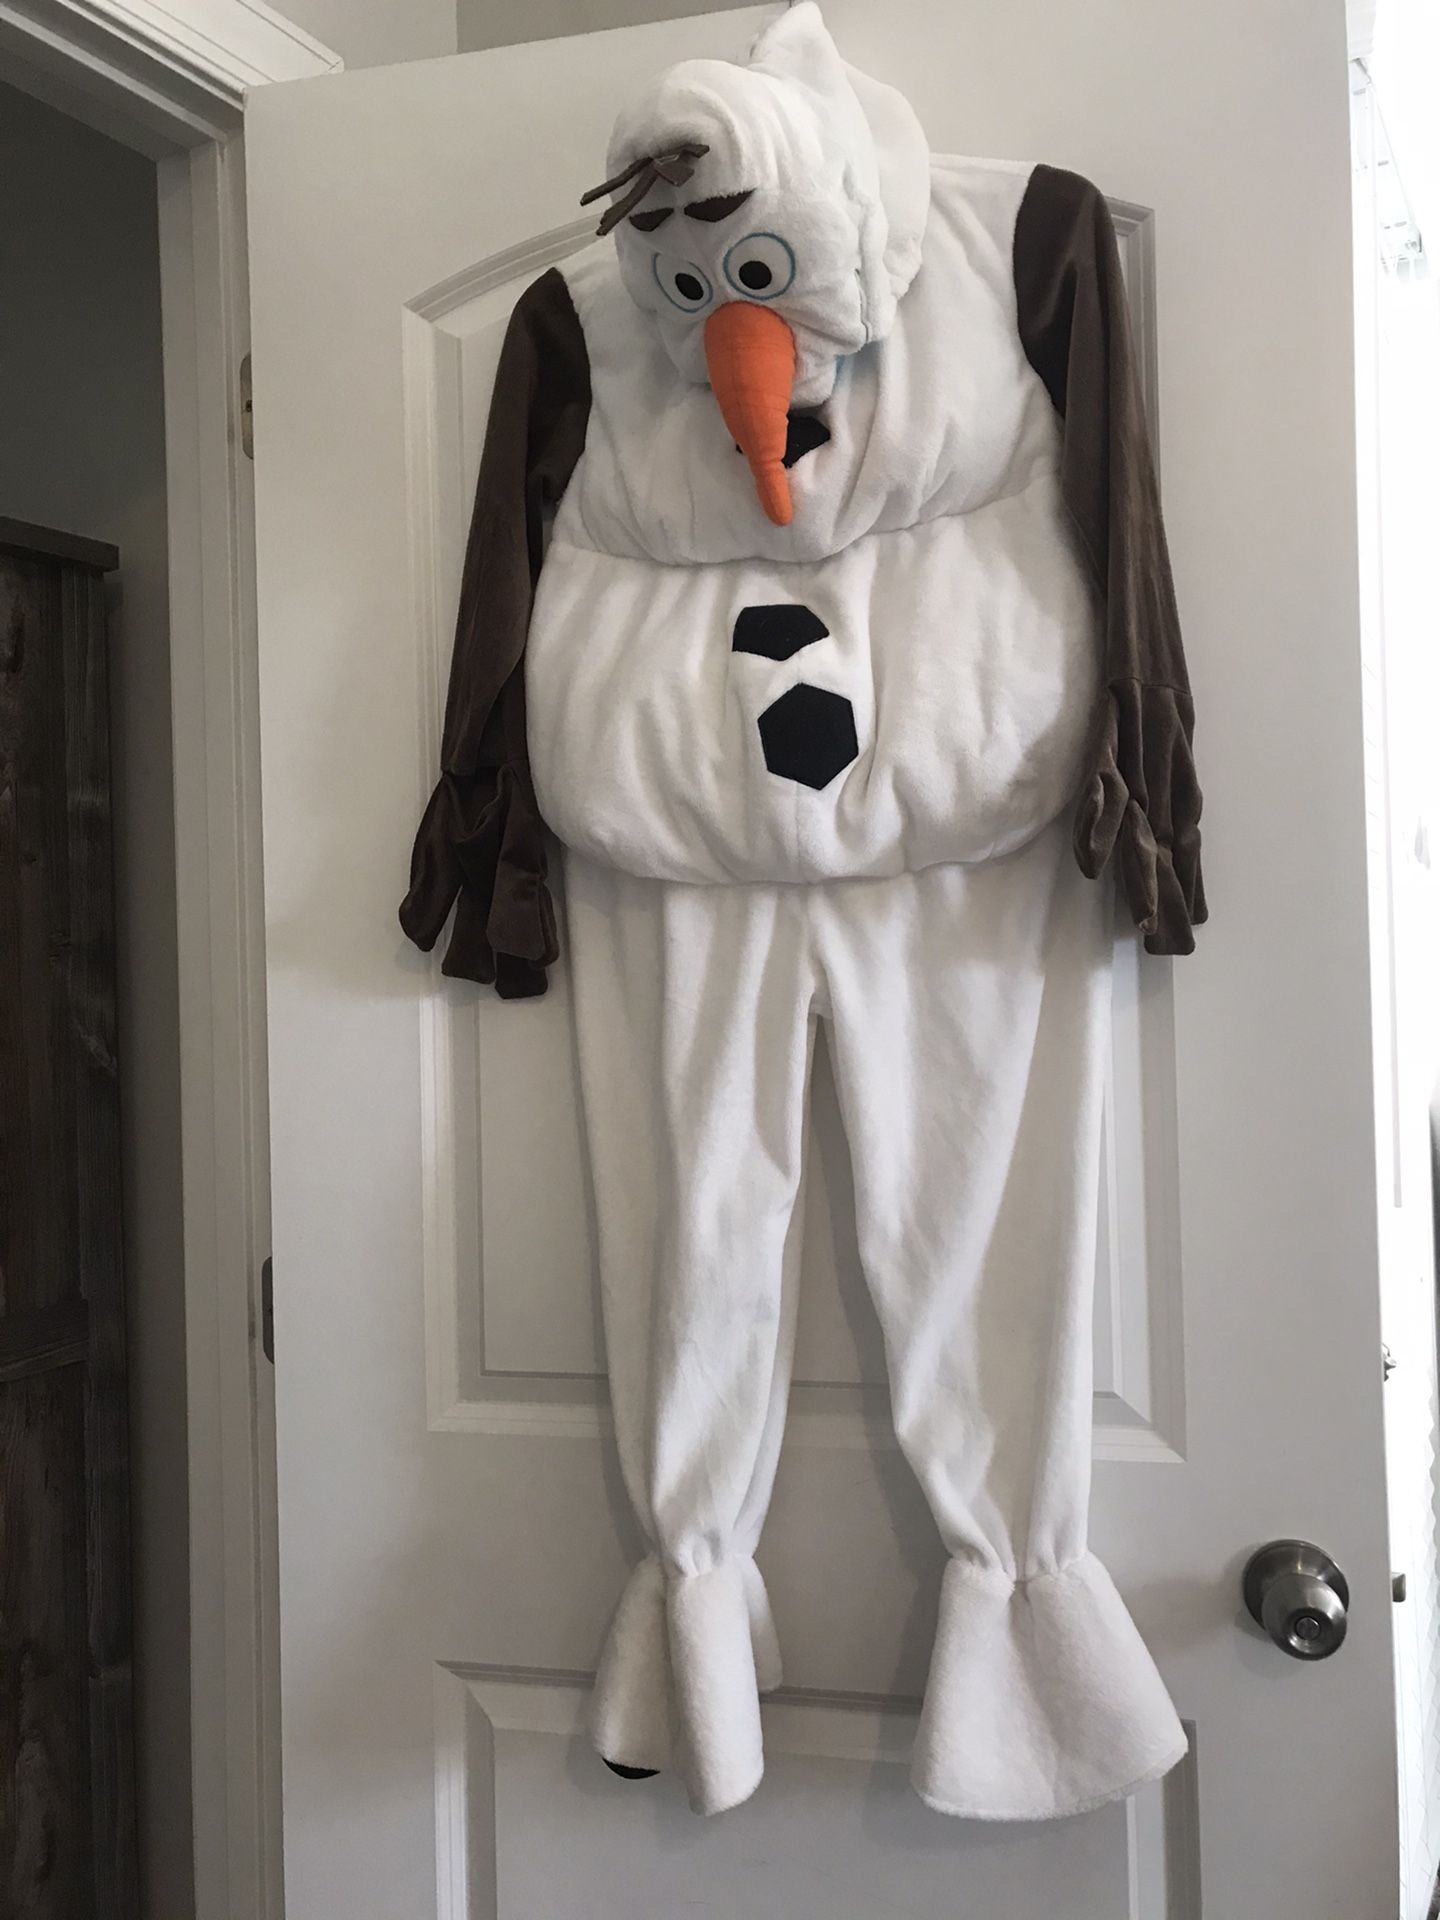 Authentic Frozen Disney Store Olaf Costume